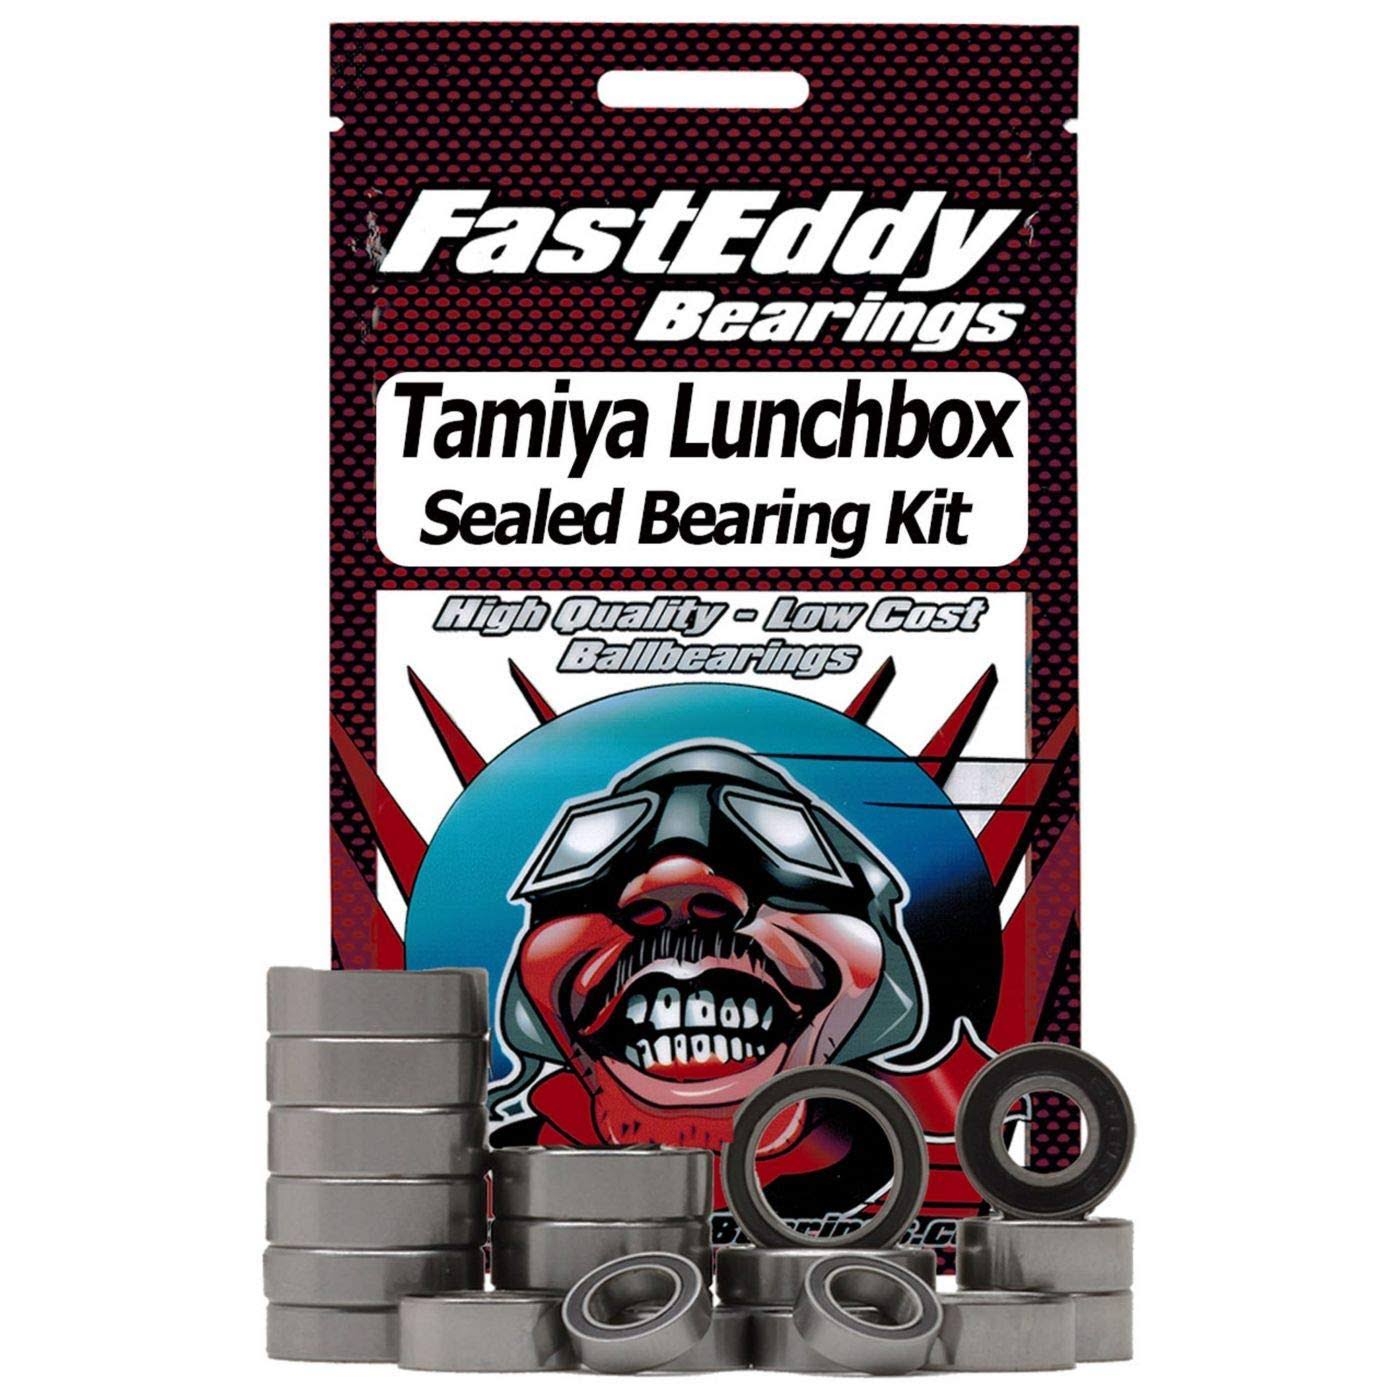 Fast Eddy Bearings Tamiya Lunchbox 1/12th (58044) Sealed Bearing Kit (TFE909)